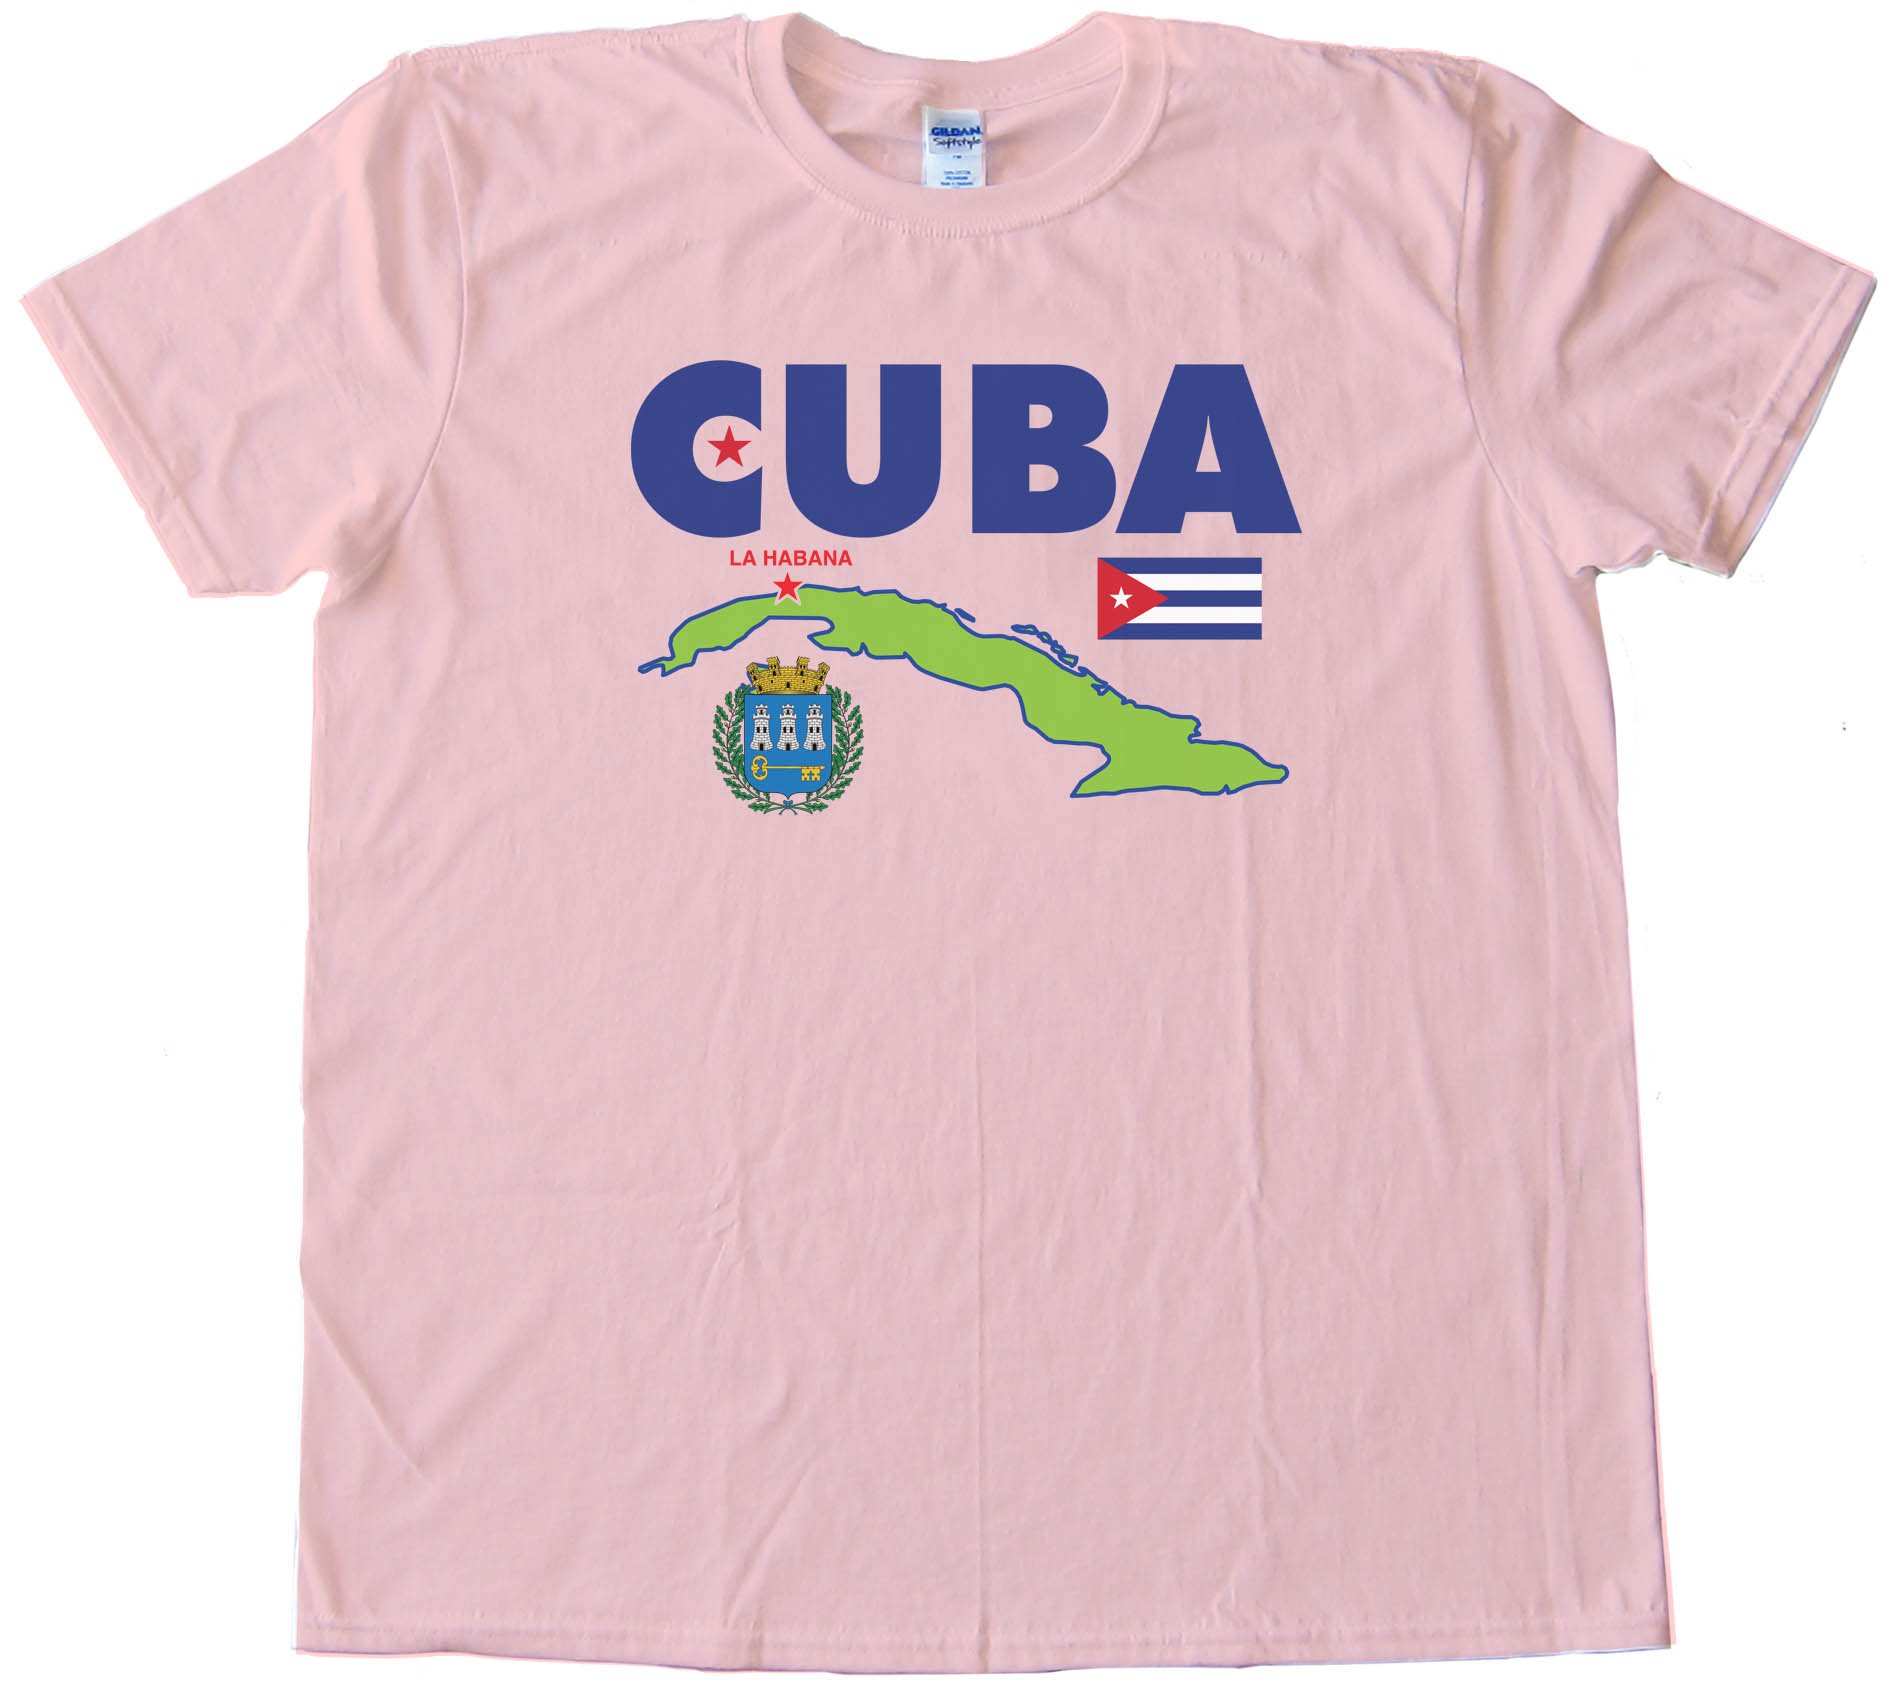 Cuba La Habana Havana Country - Tee Shirt